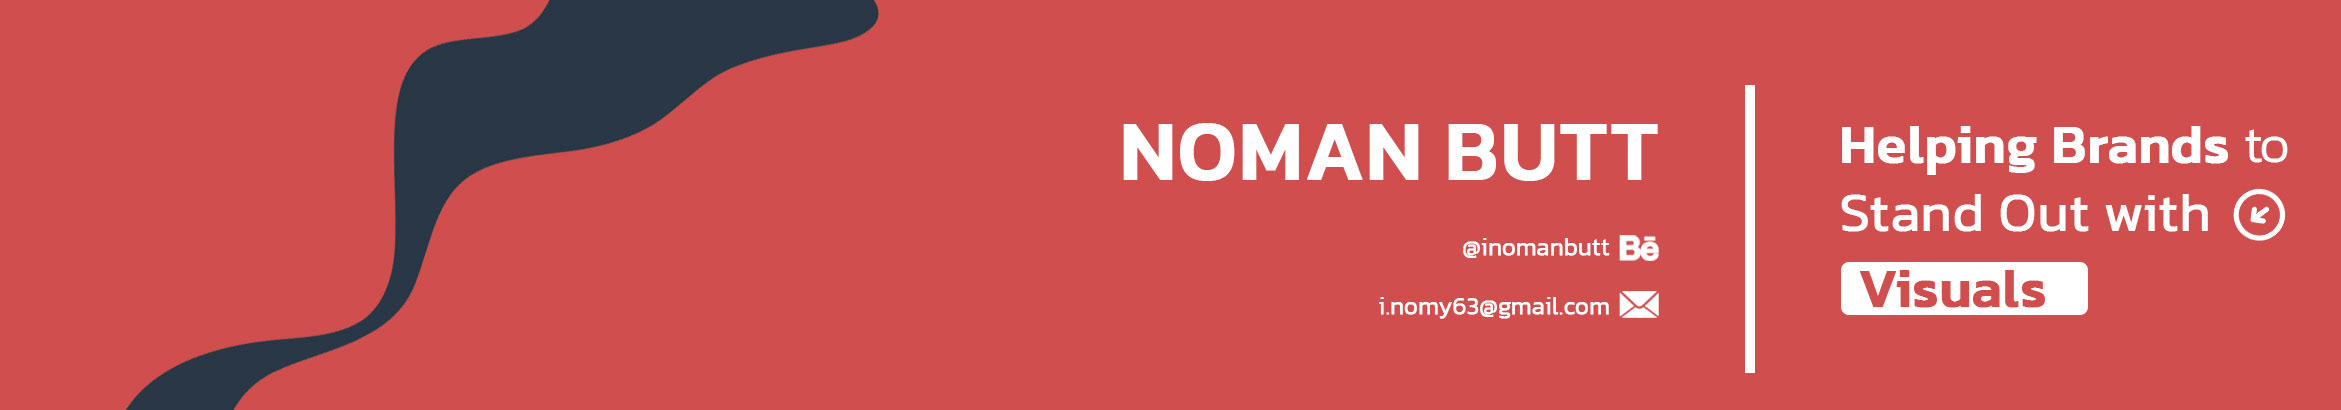 Noman Butt's profile banner